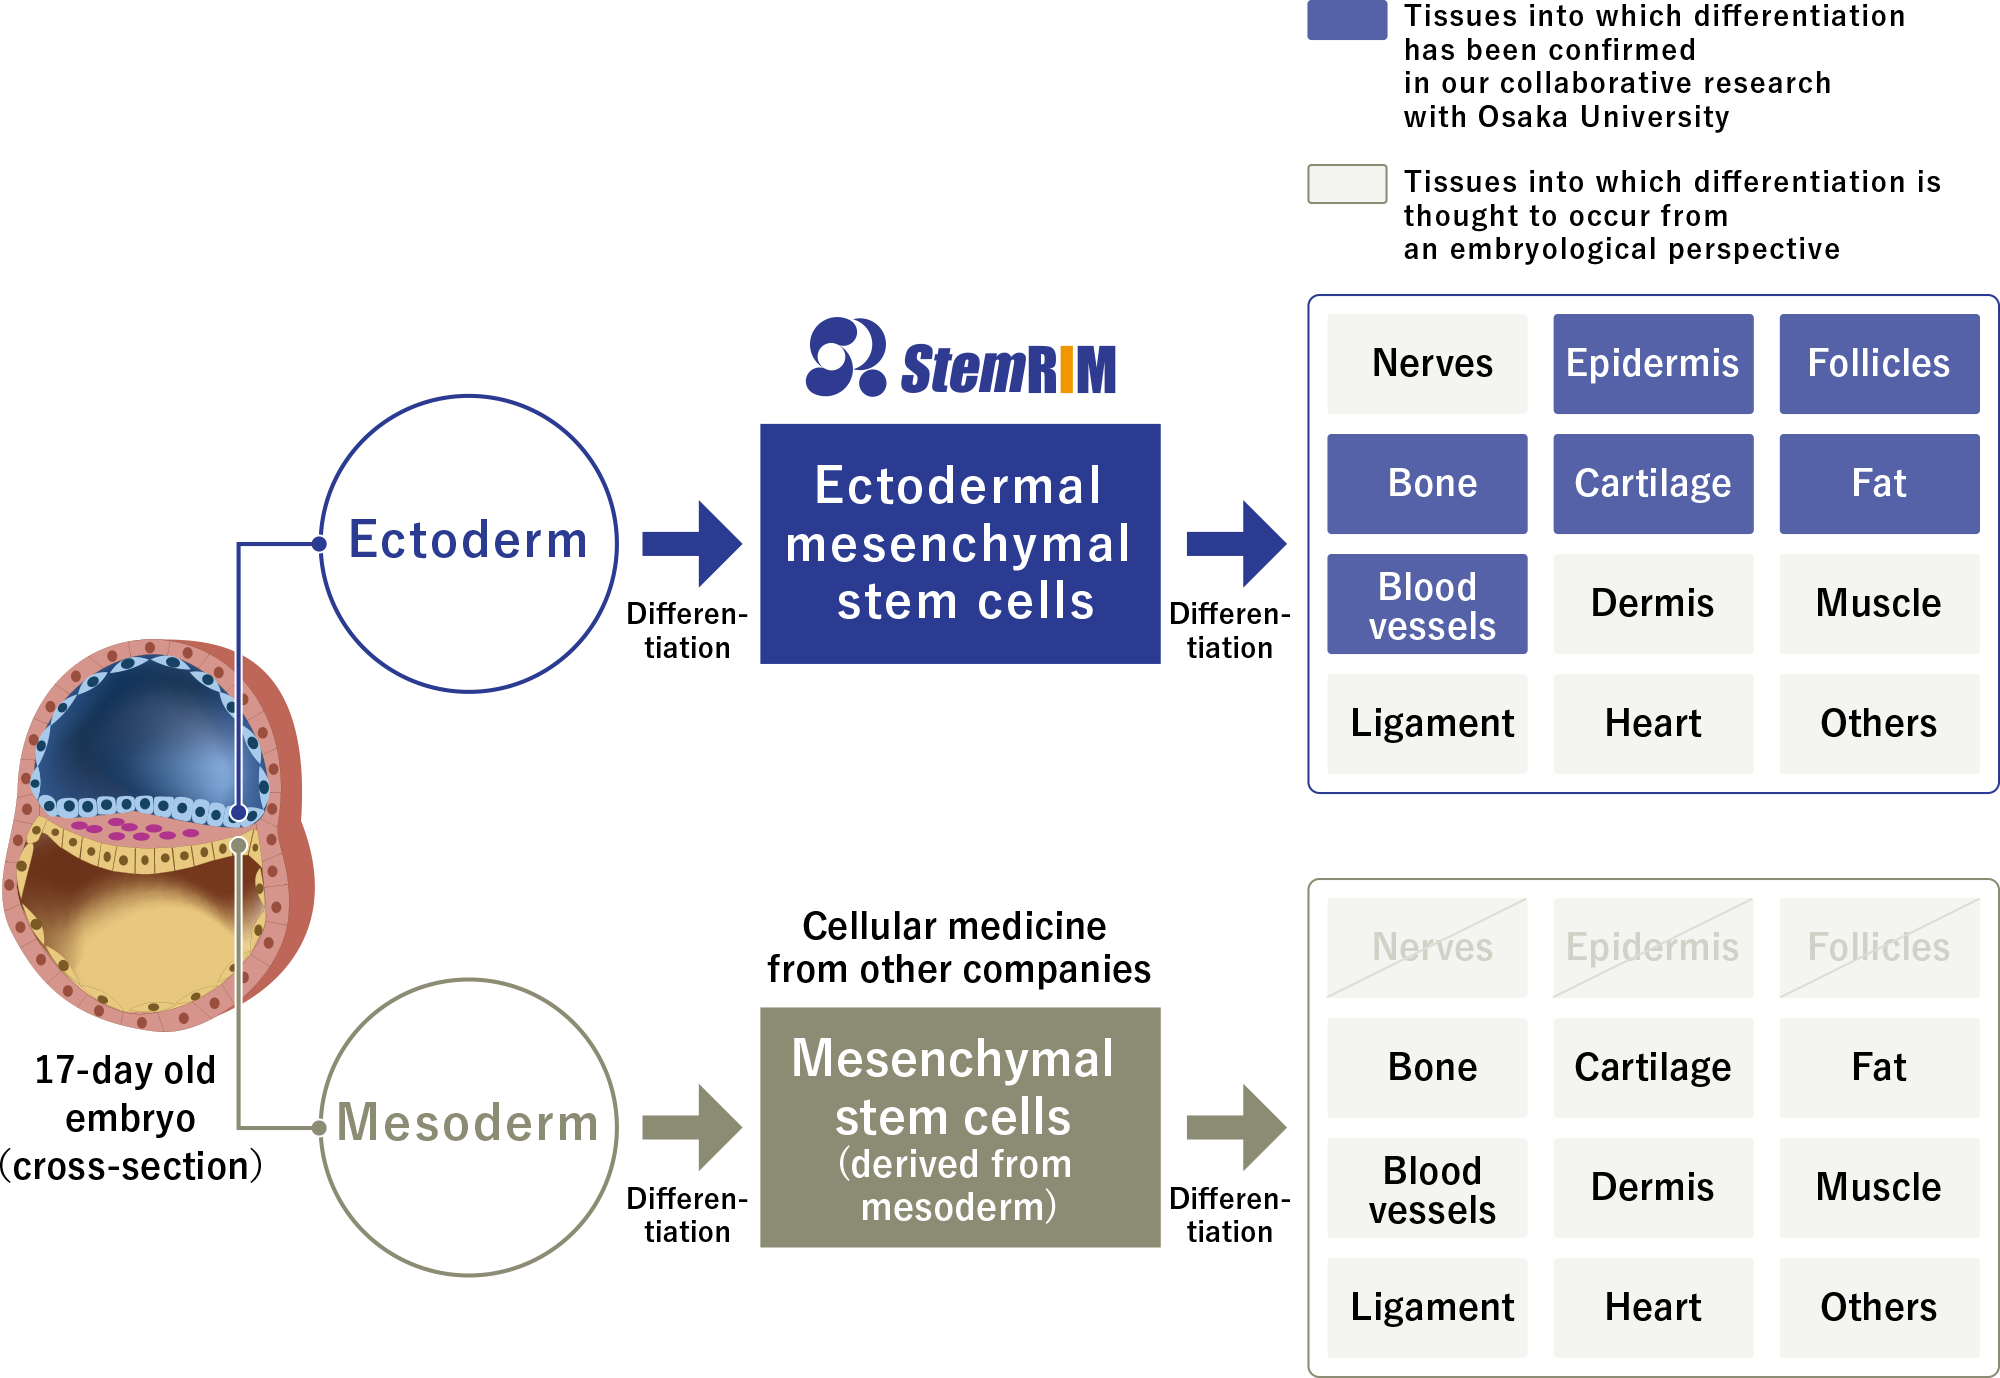 stemrim 02 - Redasemtide: Universal Medicine for Regeneration of Any Tissue